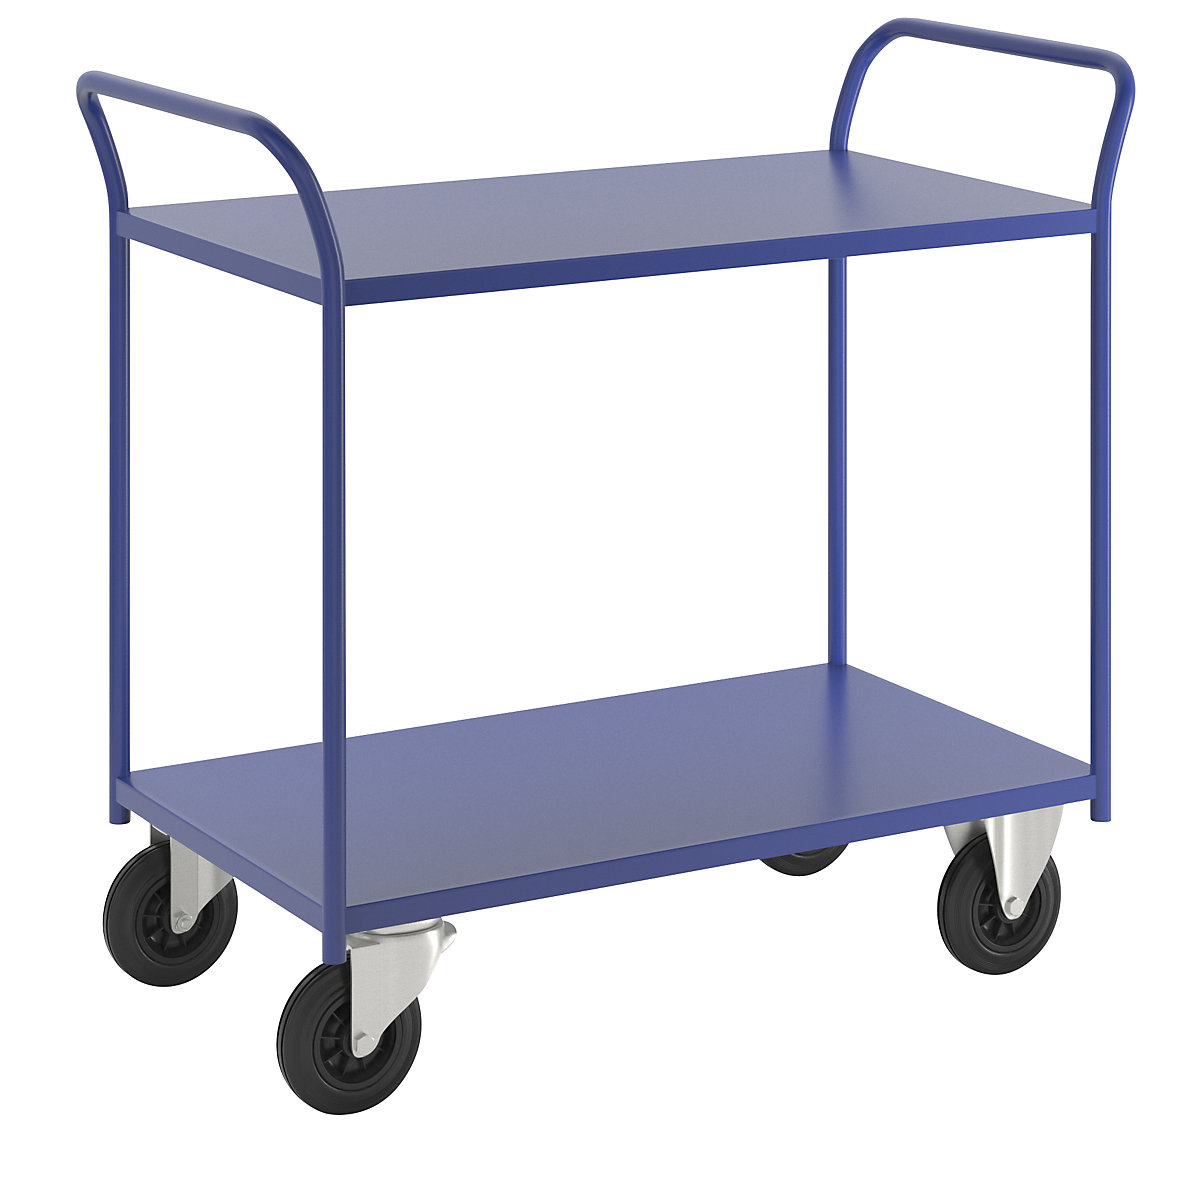 Stolový vozík KM41 – Kongamek, 2 etáže, d x š x v 1070 x 550 x 1000 mm, modrá, 2 otočná a 2 pevná kola-1